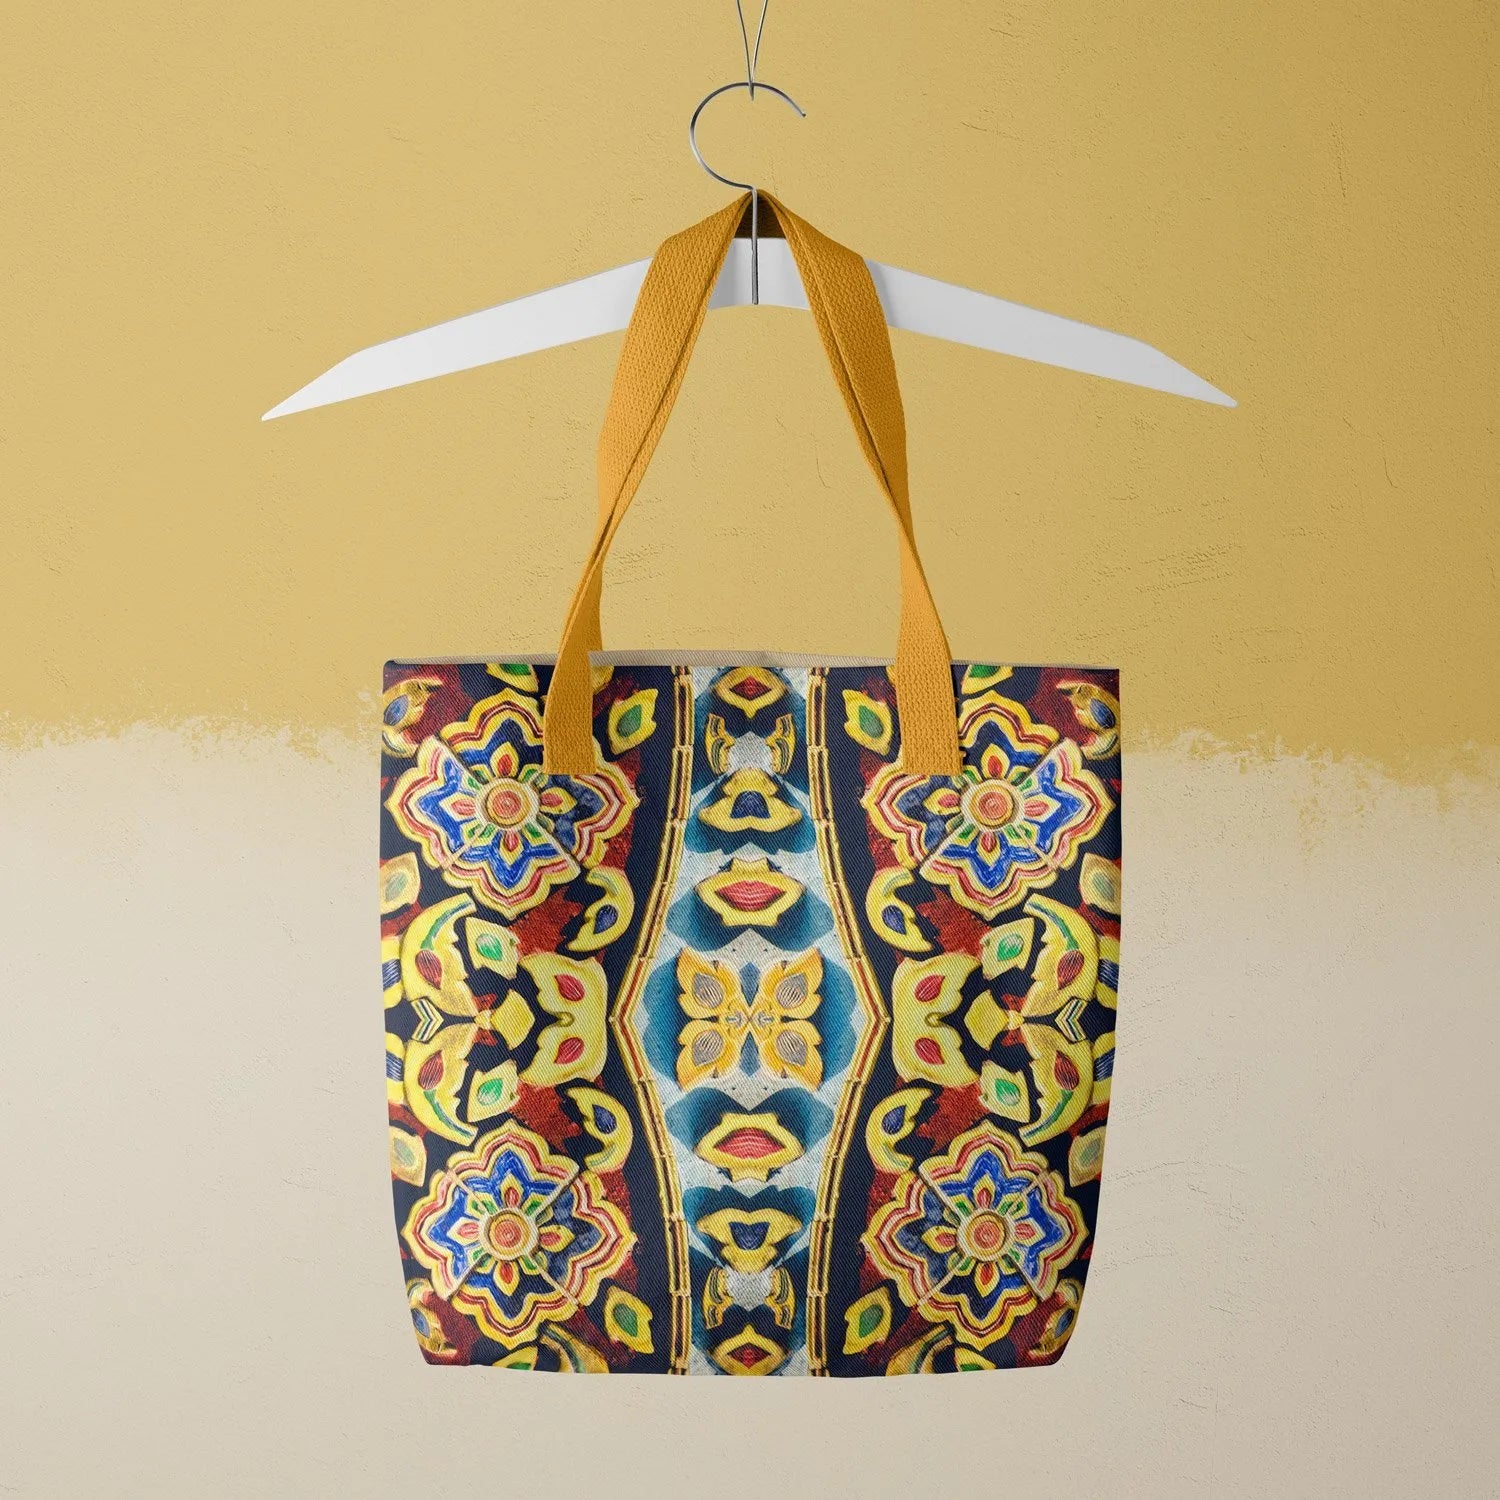 Masala Thai Tote - Heavy Duty Reusable Grocery Bag - Yellow Handles - Shopping Totes - Aesthetic Art